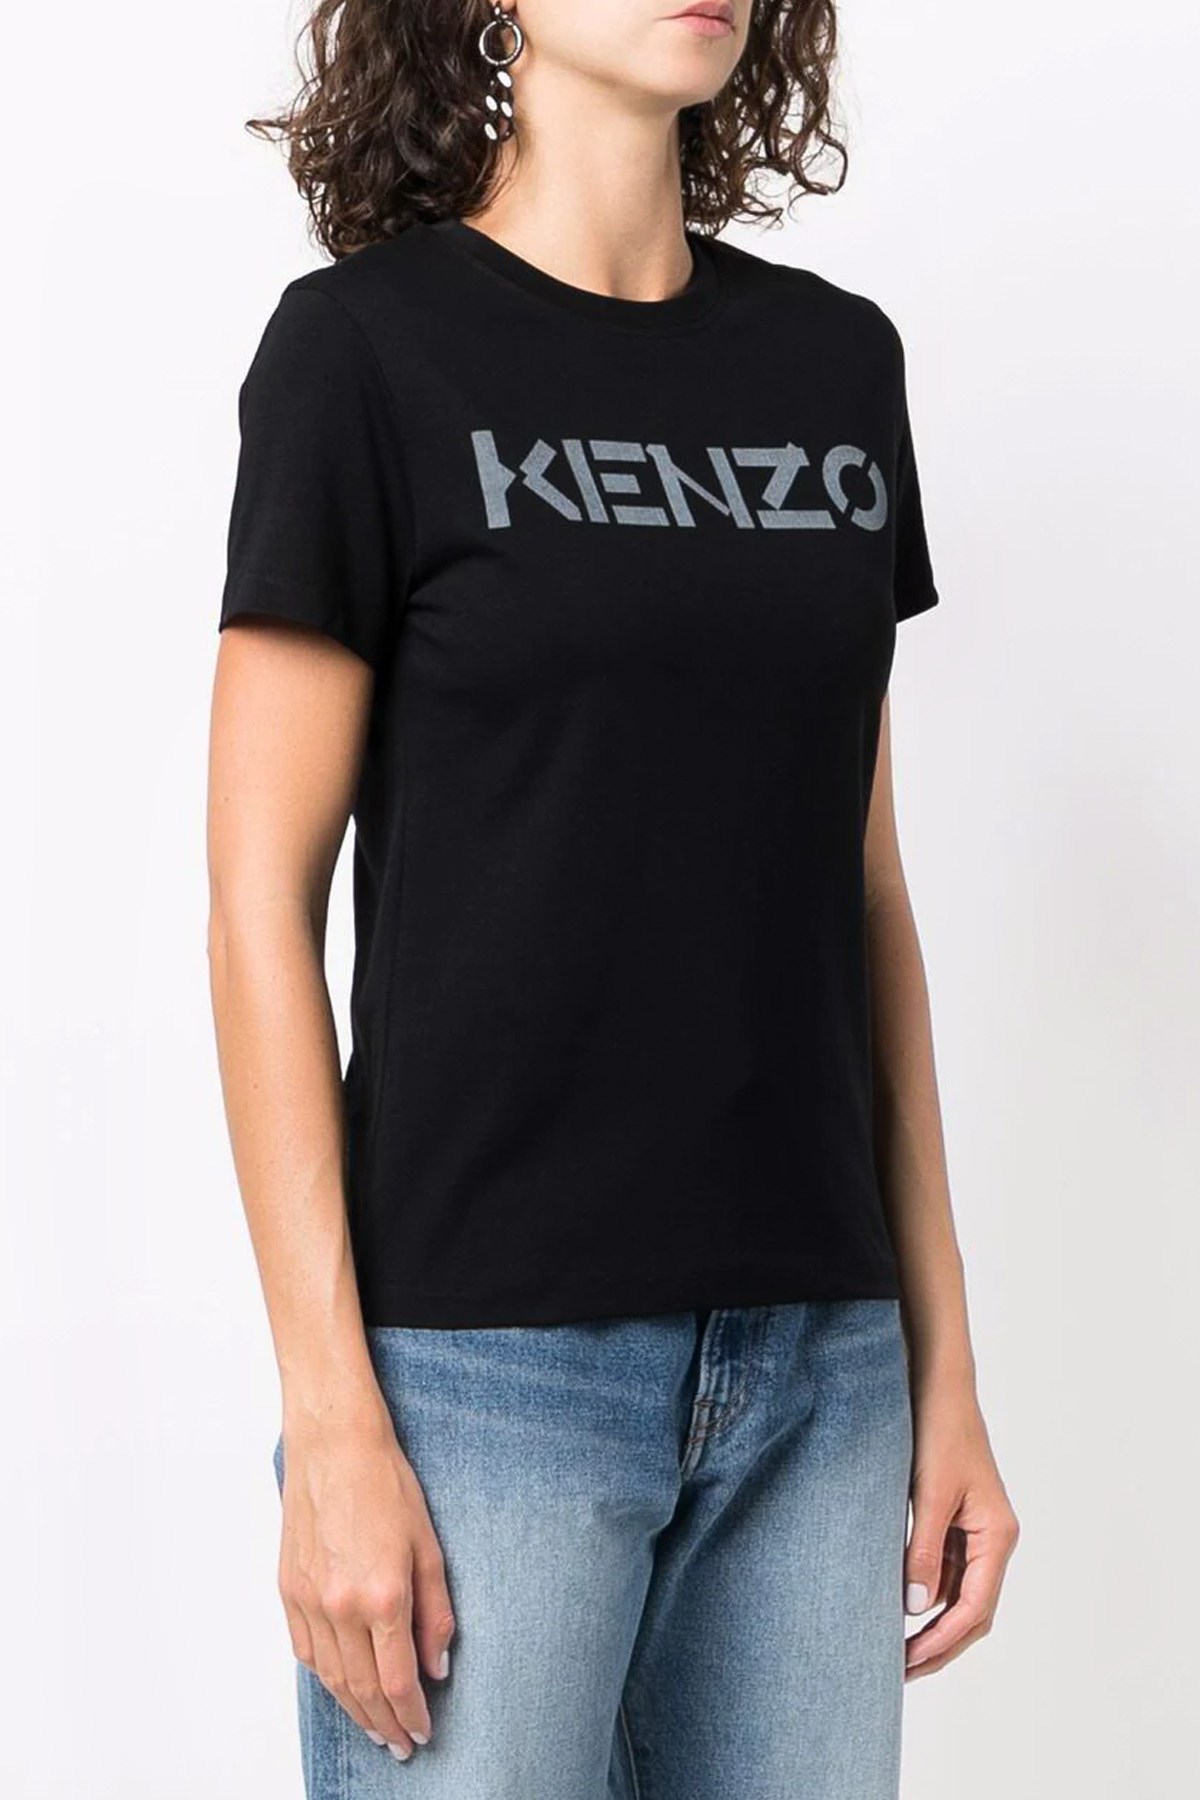 Dos grados antiguo Barrio bajo Camiseta de mujer logo Kenzo negro • Dolce Vita Boutique